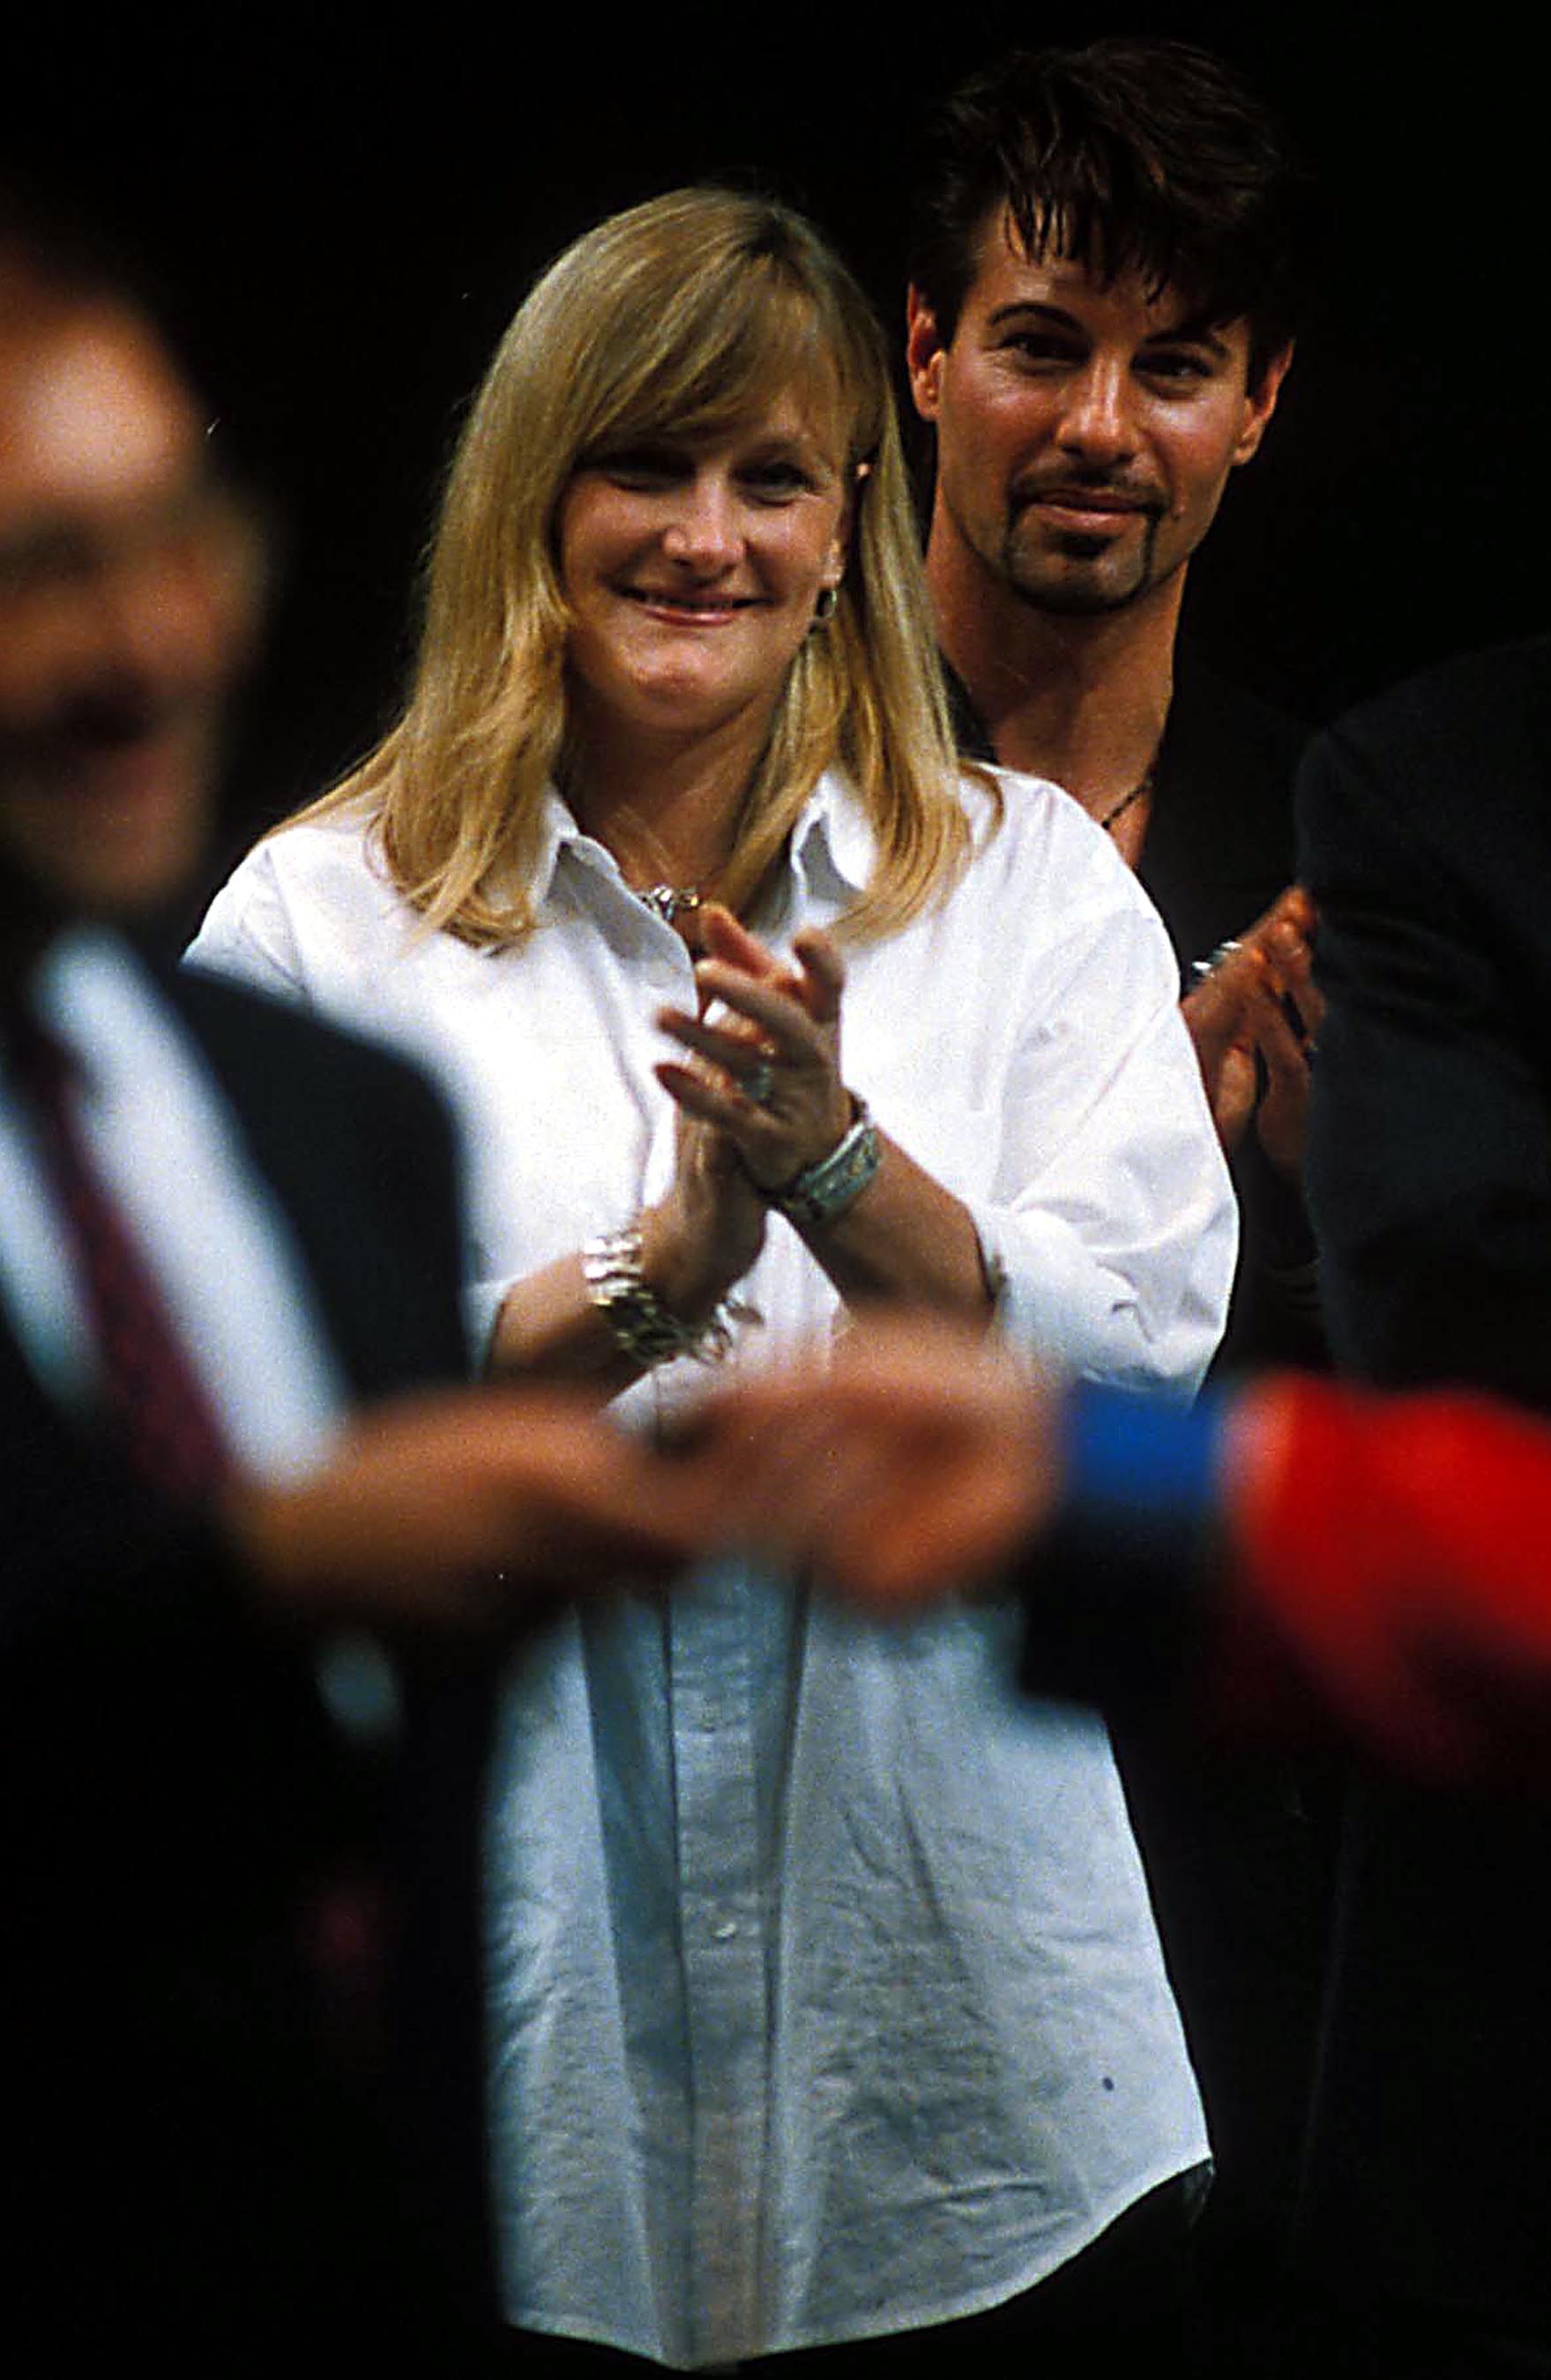 Debbie Rowe le 1er juillet 1997 à Sheffield, Angleterre | Source : Getty Images